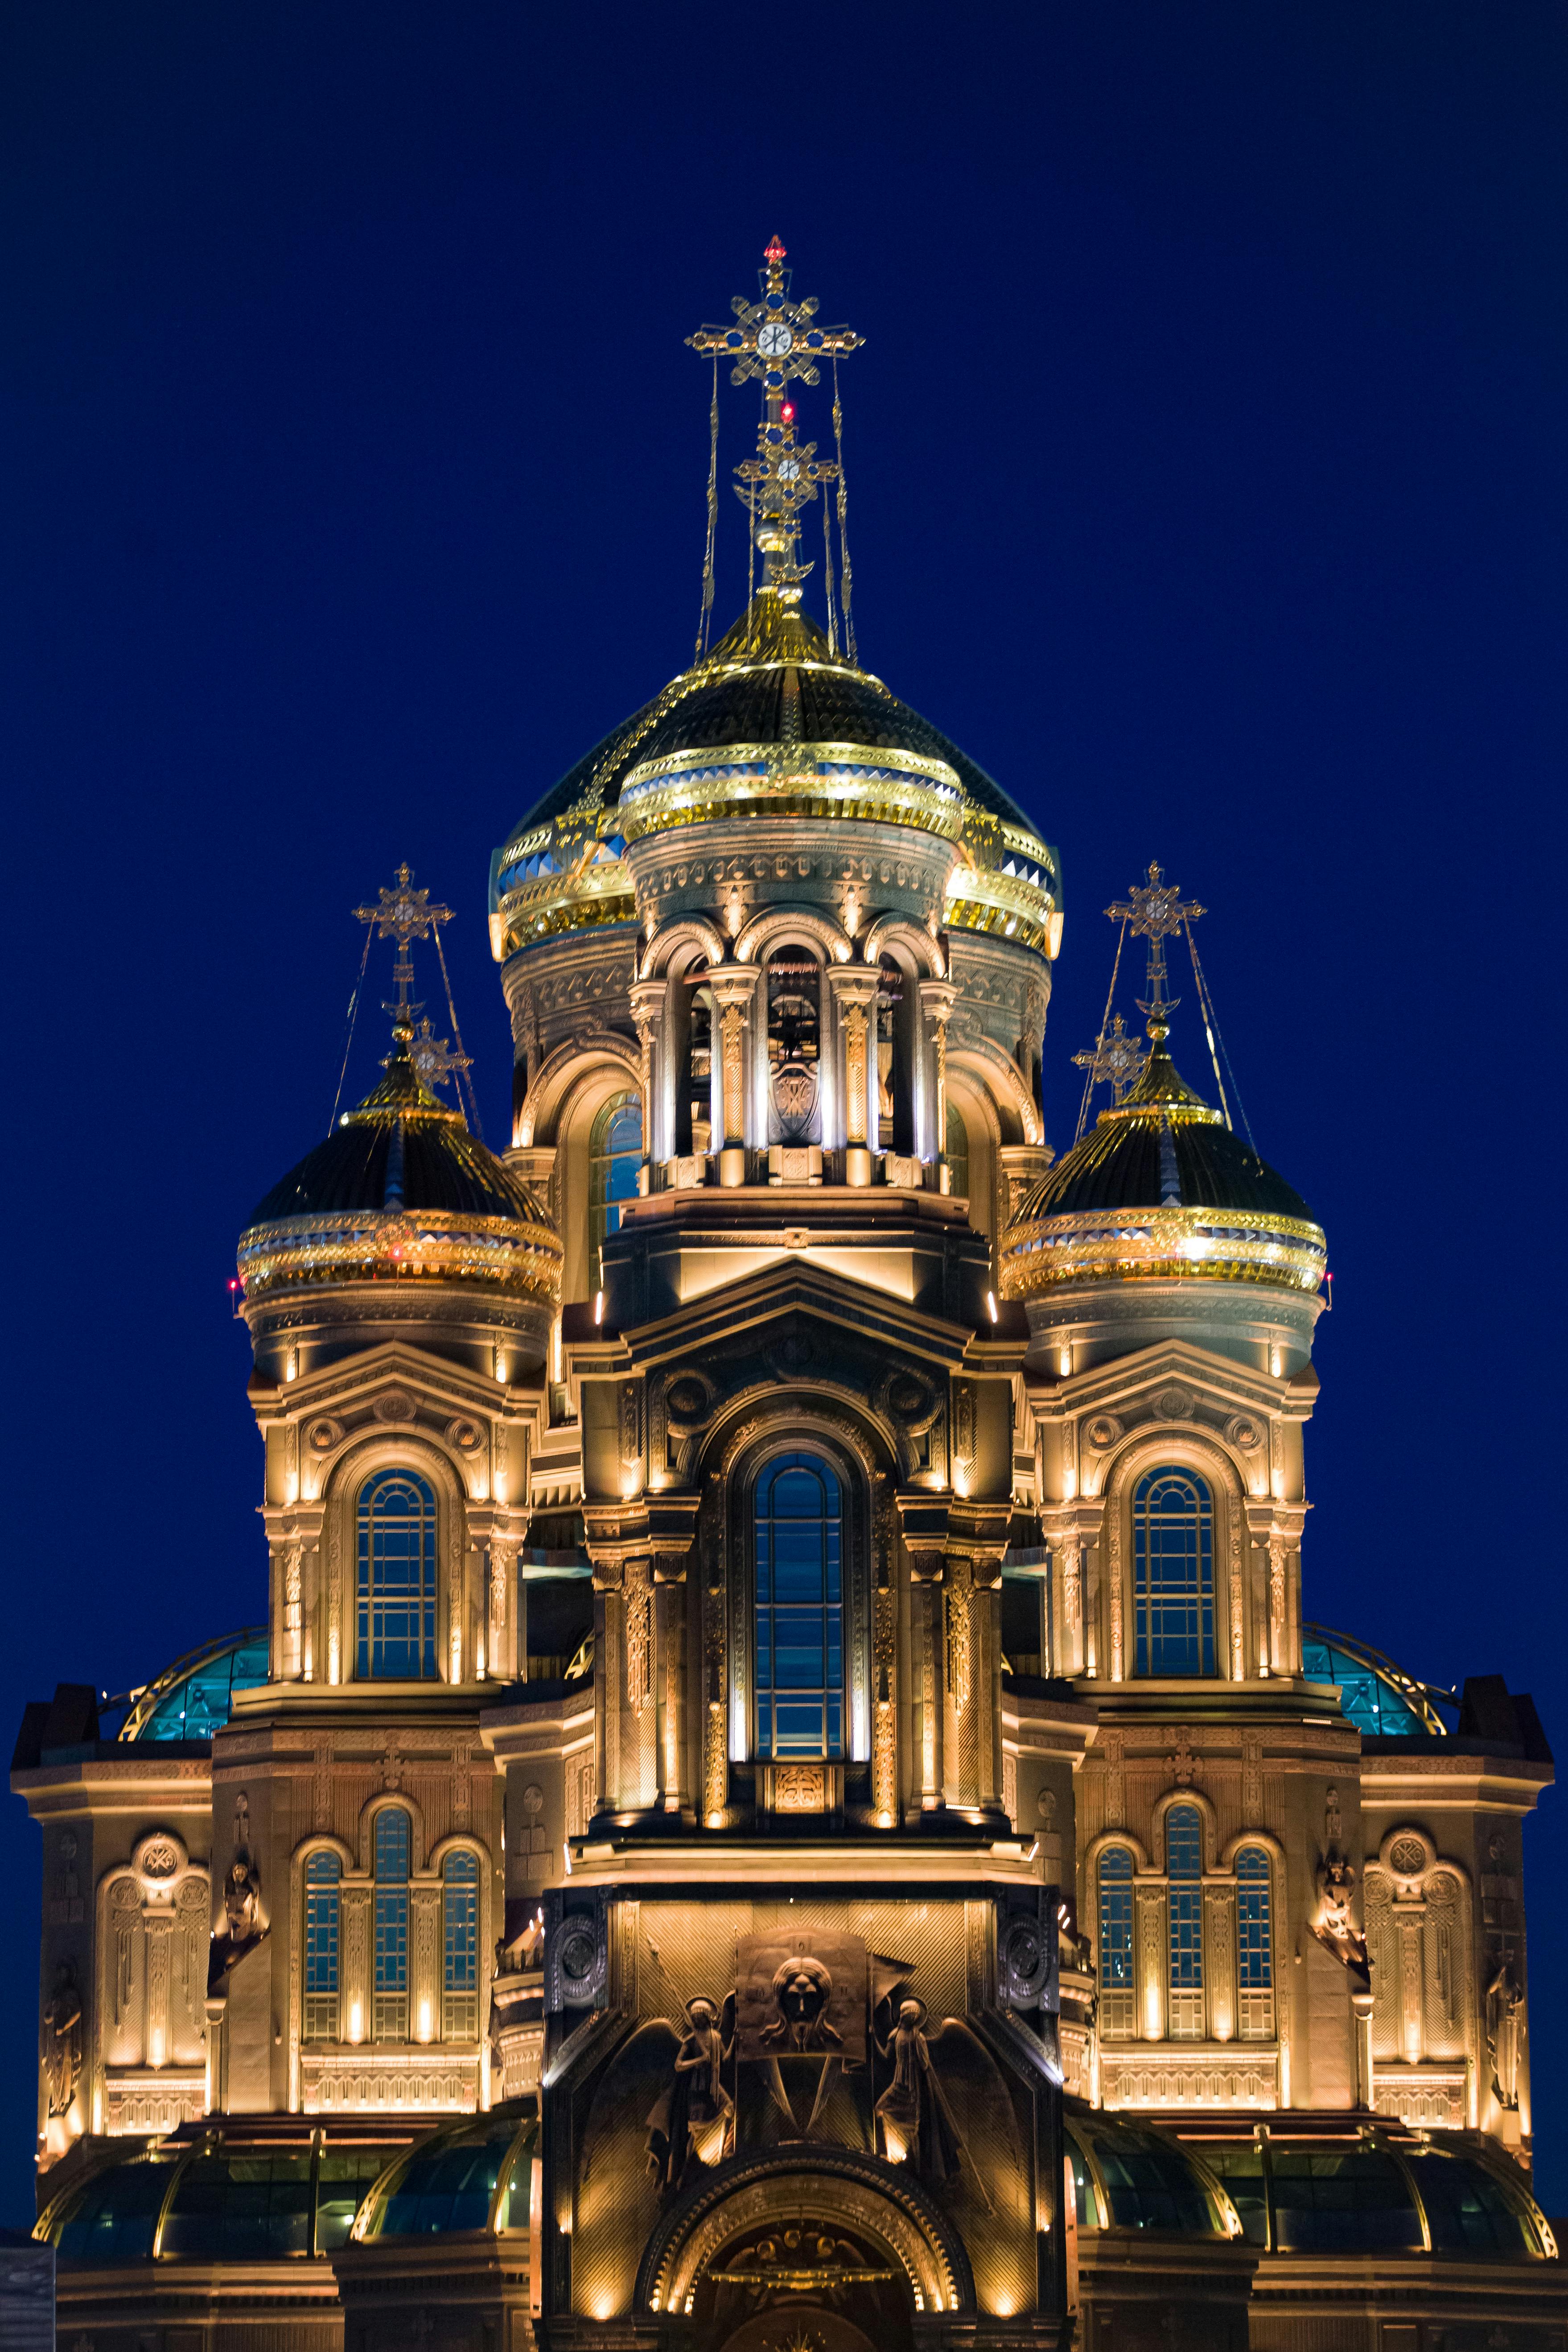 Orthodox icons